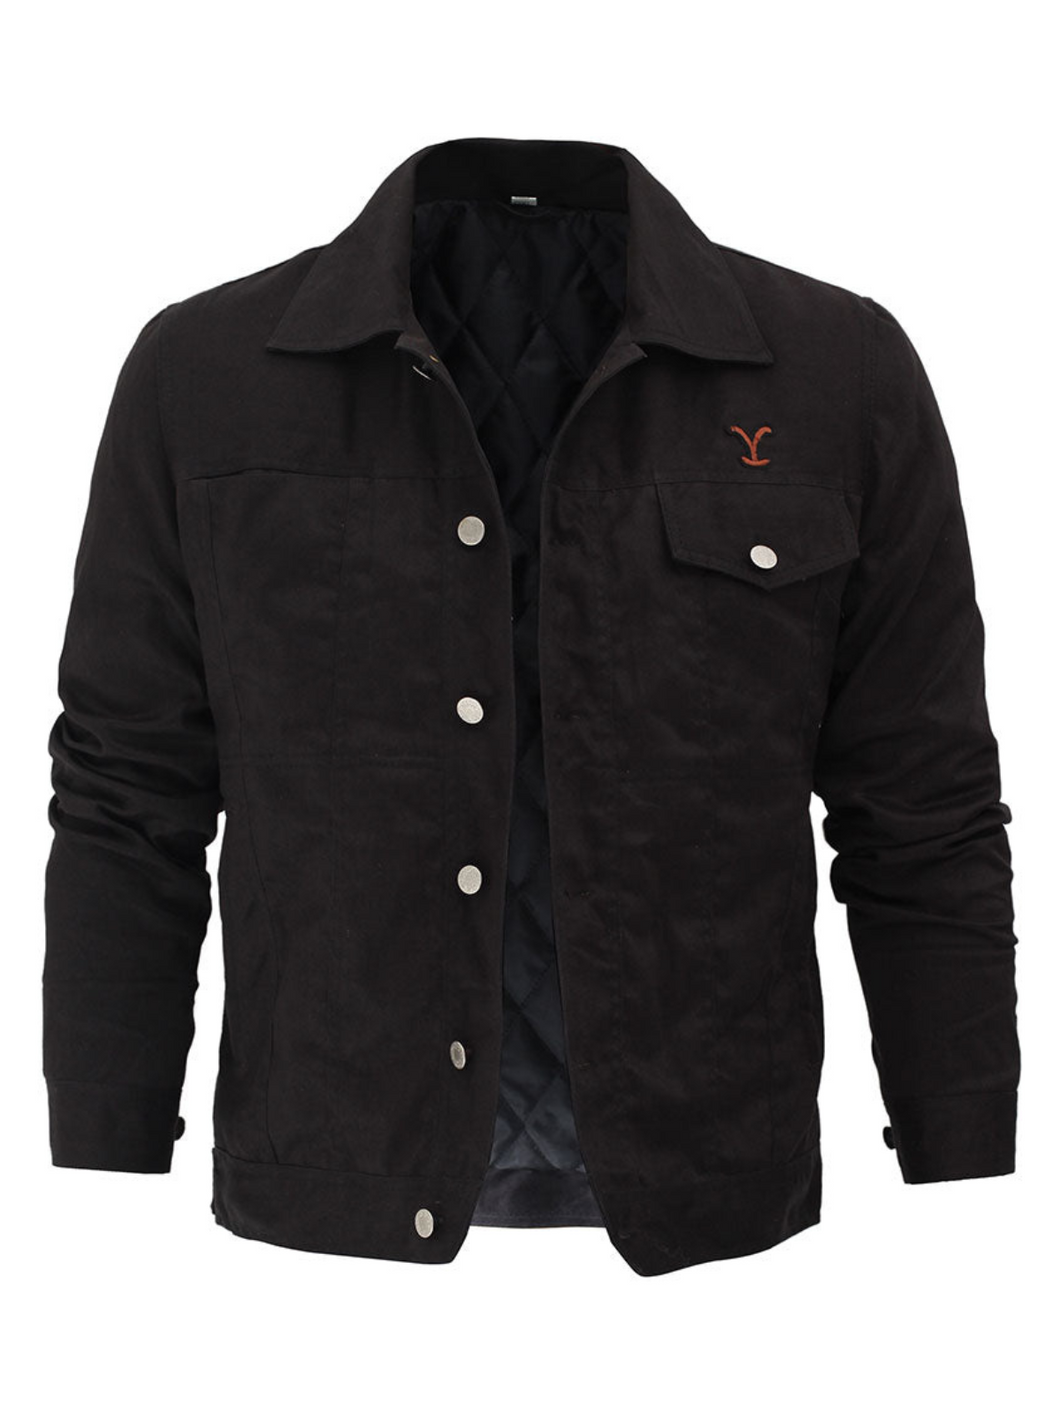 Yellowstone Cole Hauser Rip Wheeler Black Cotton Jacket